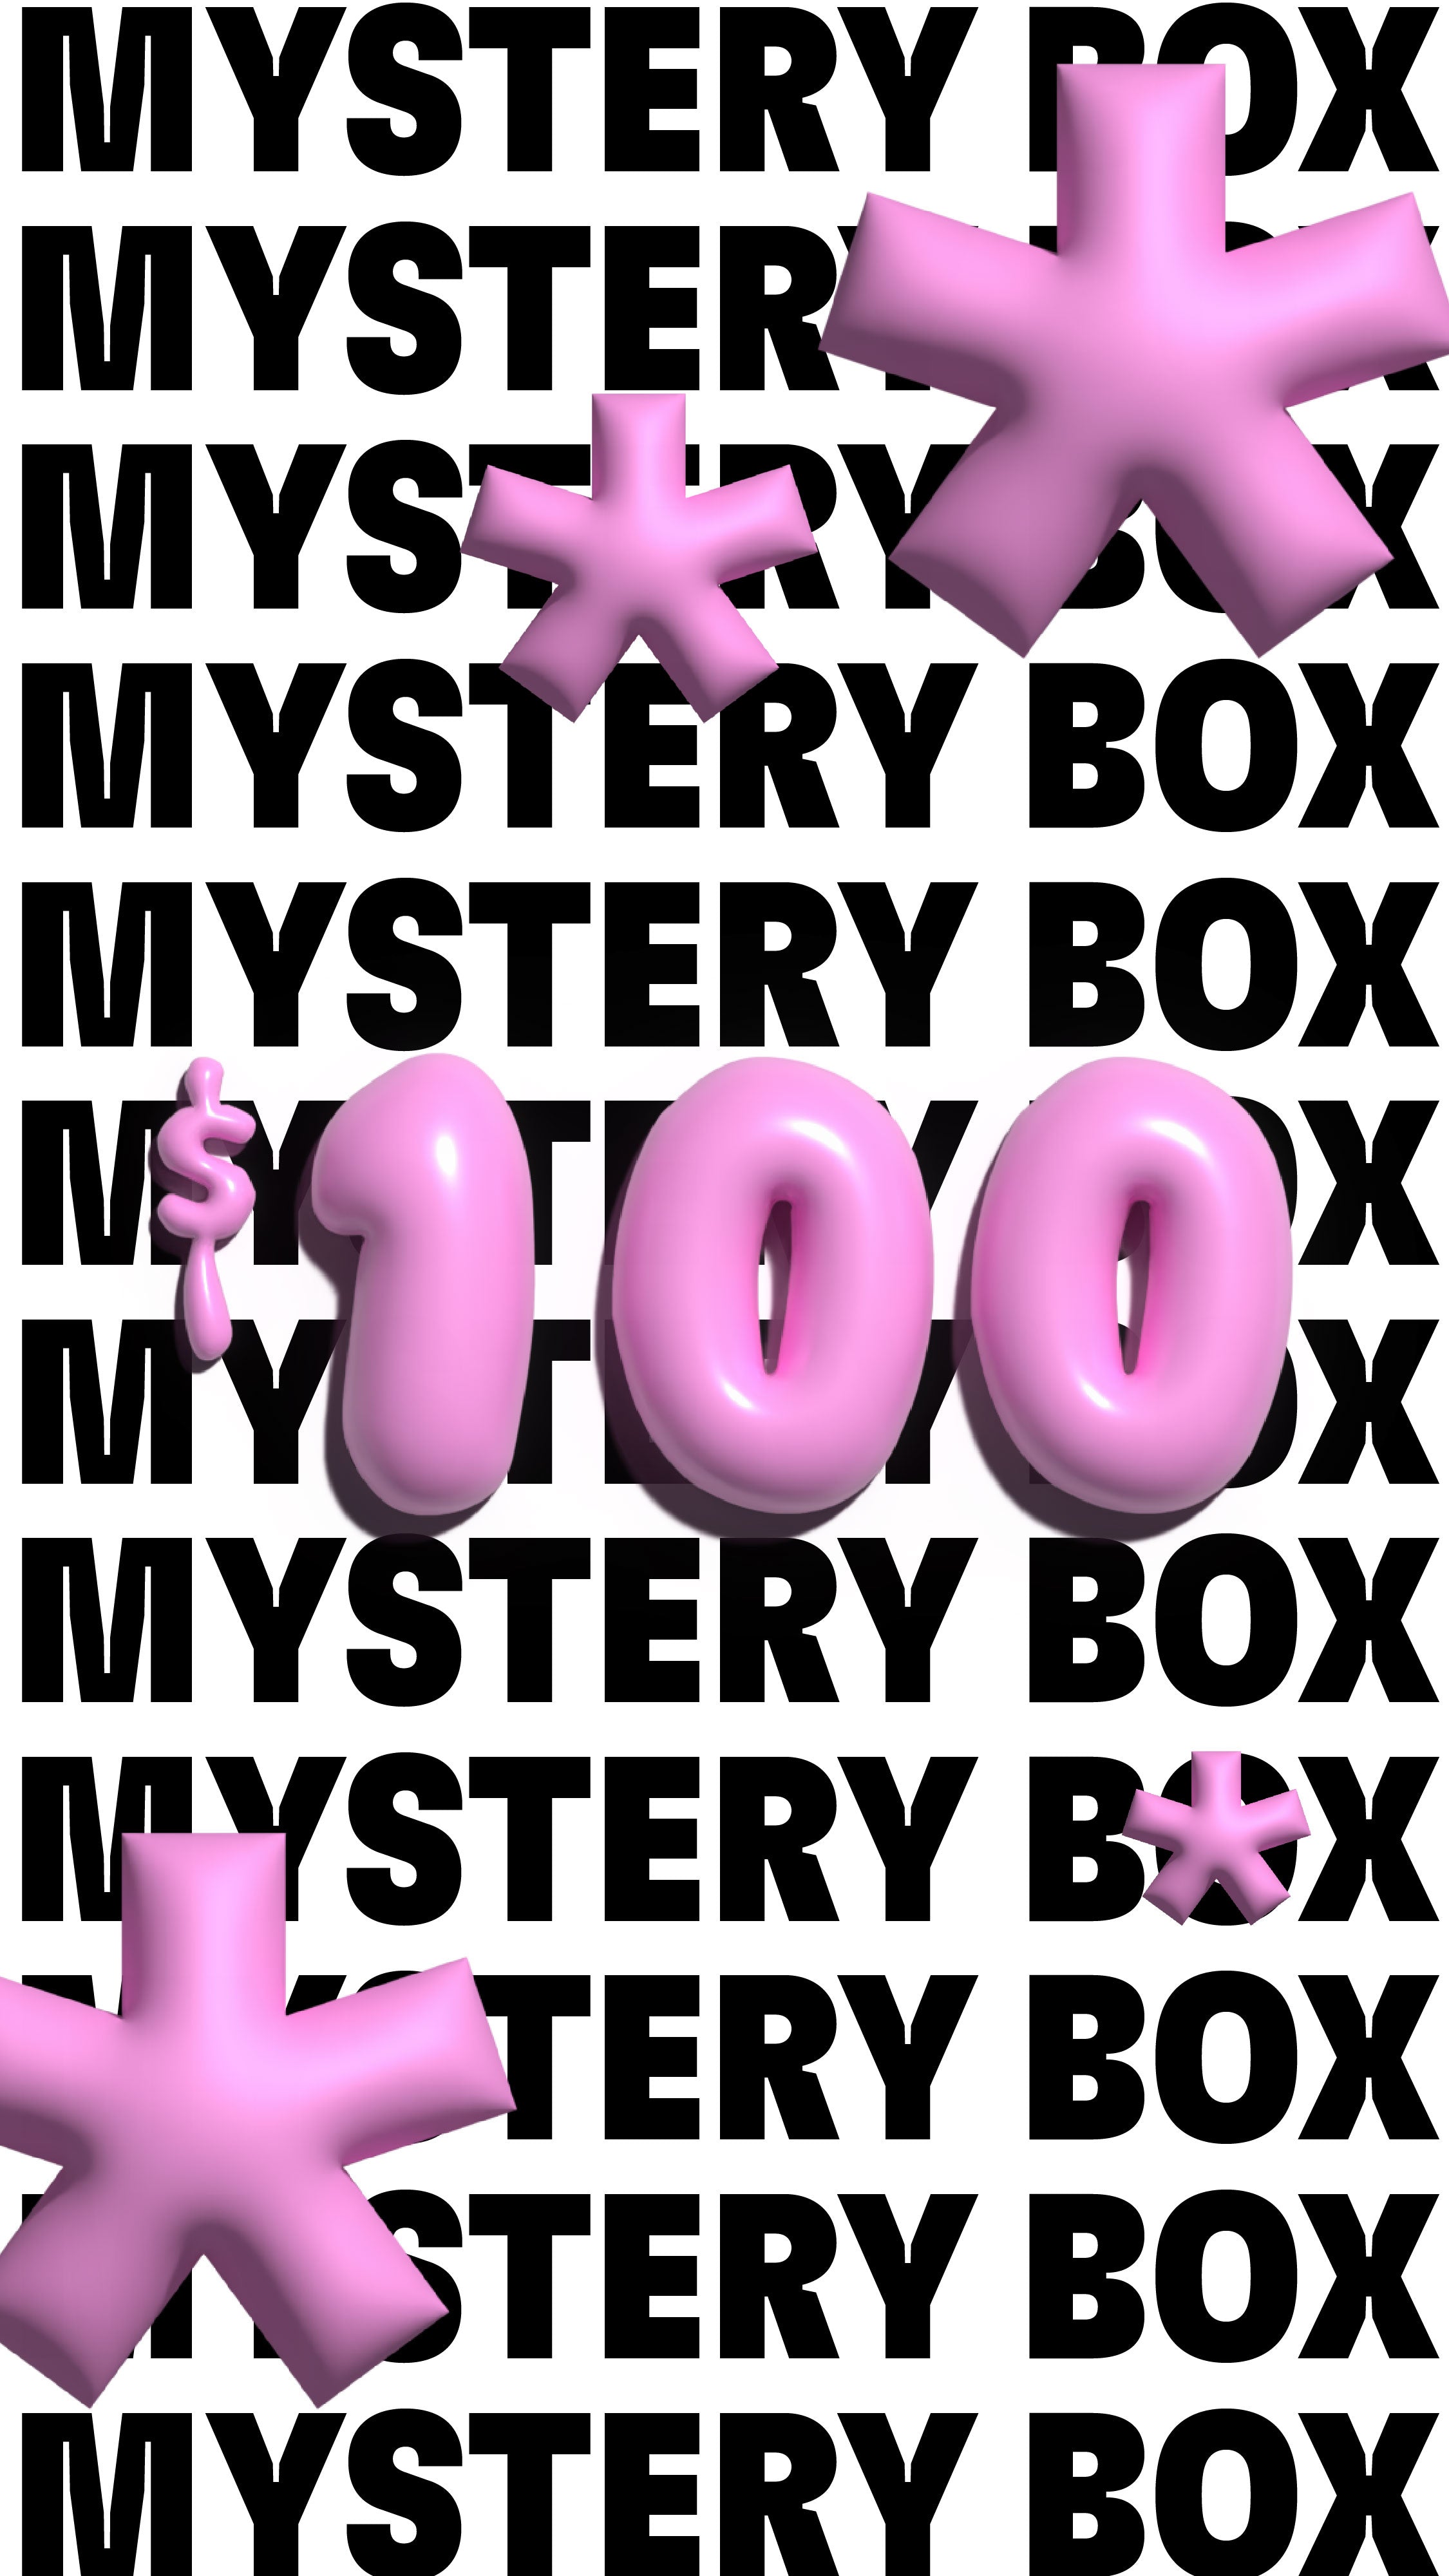 $100 Mystery Box (Apparel)